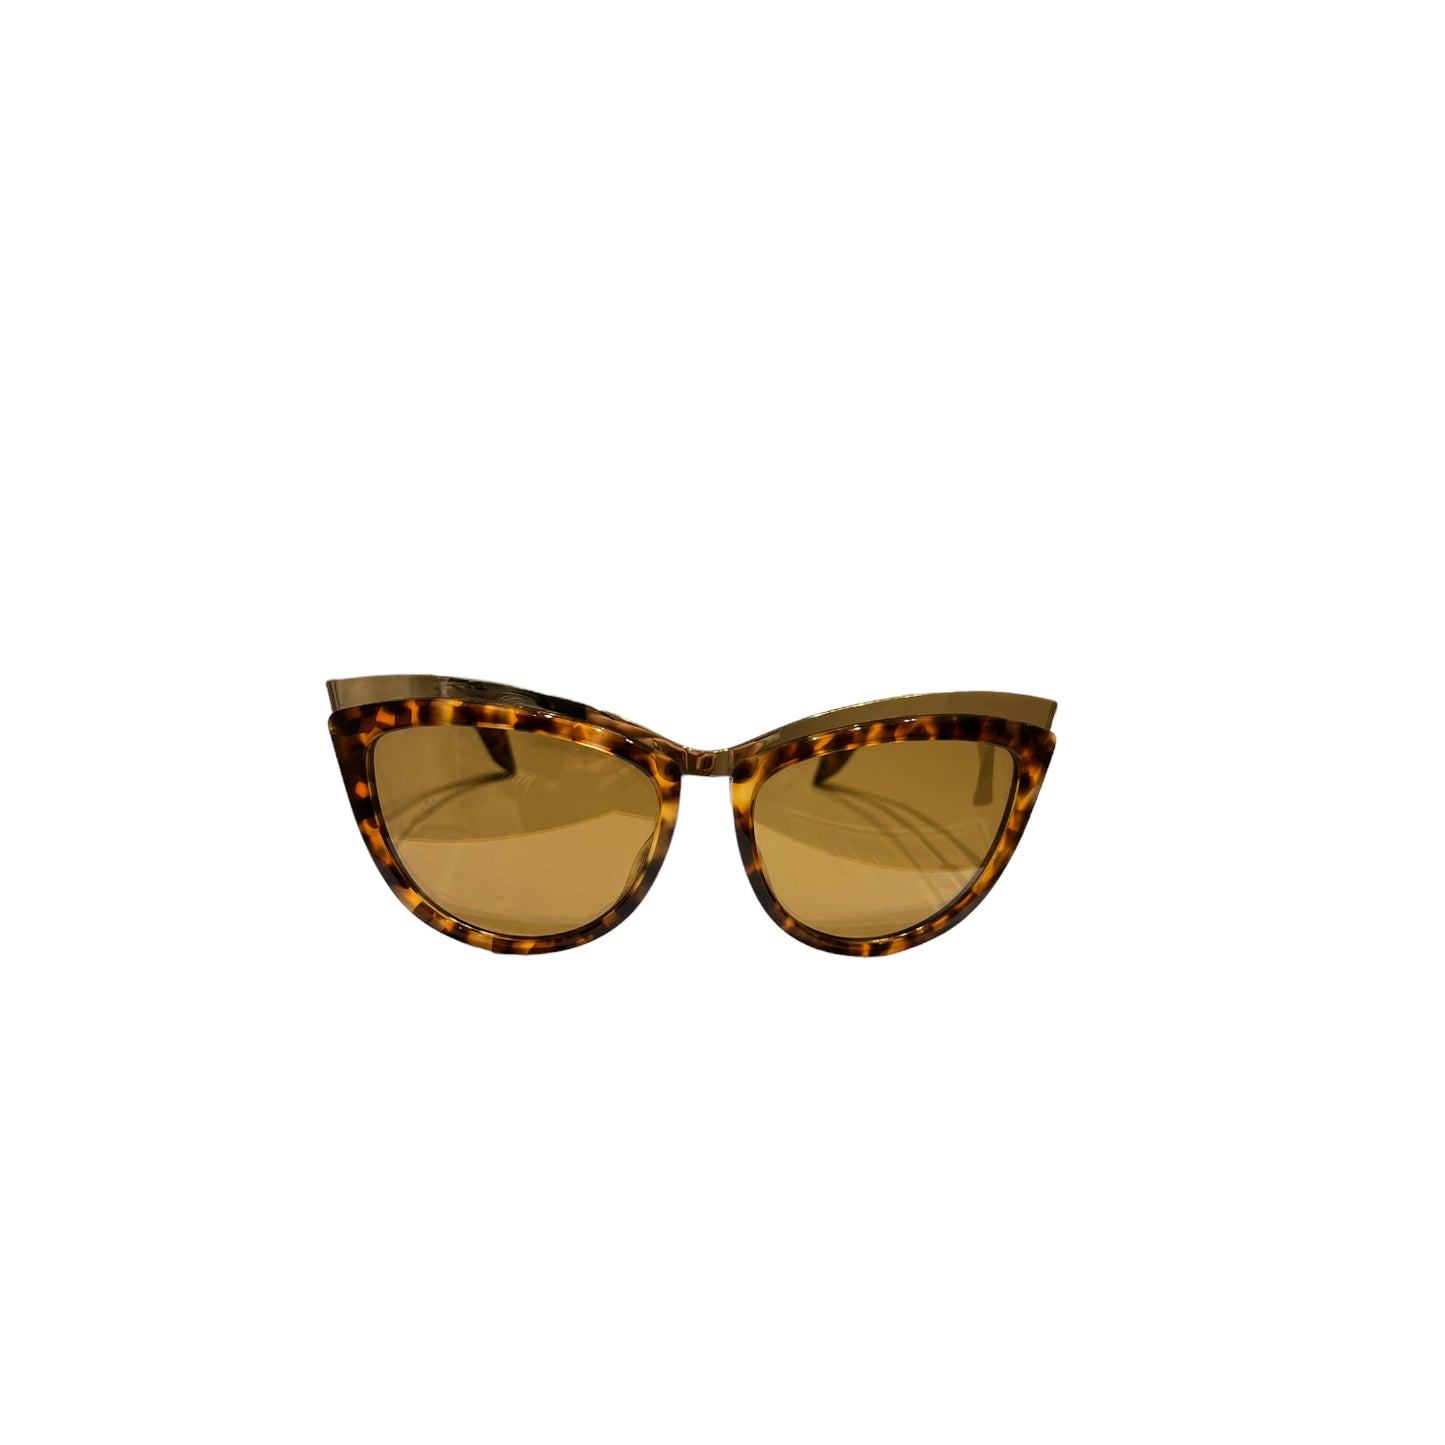 Alexander McQueen Tortoiseshell Sunglasses